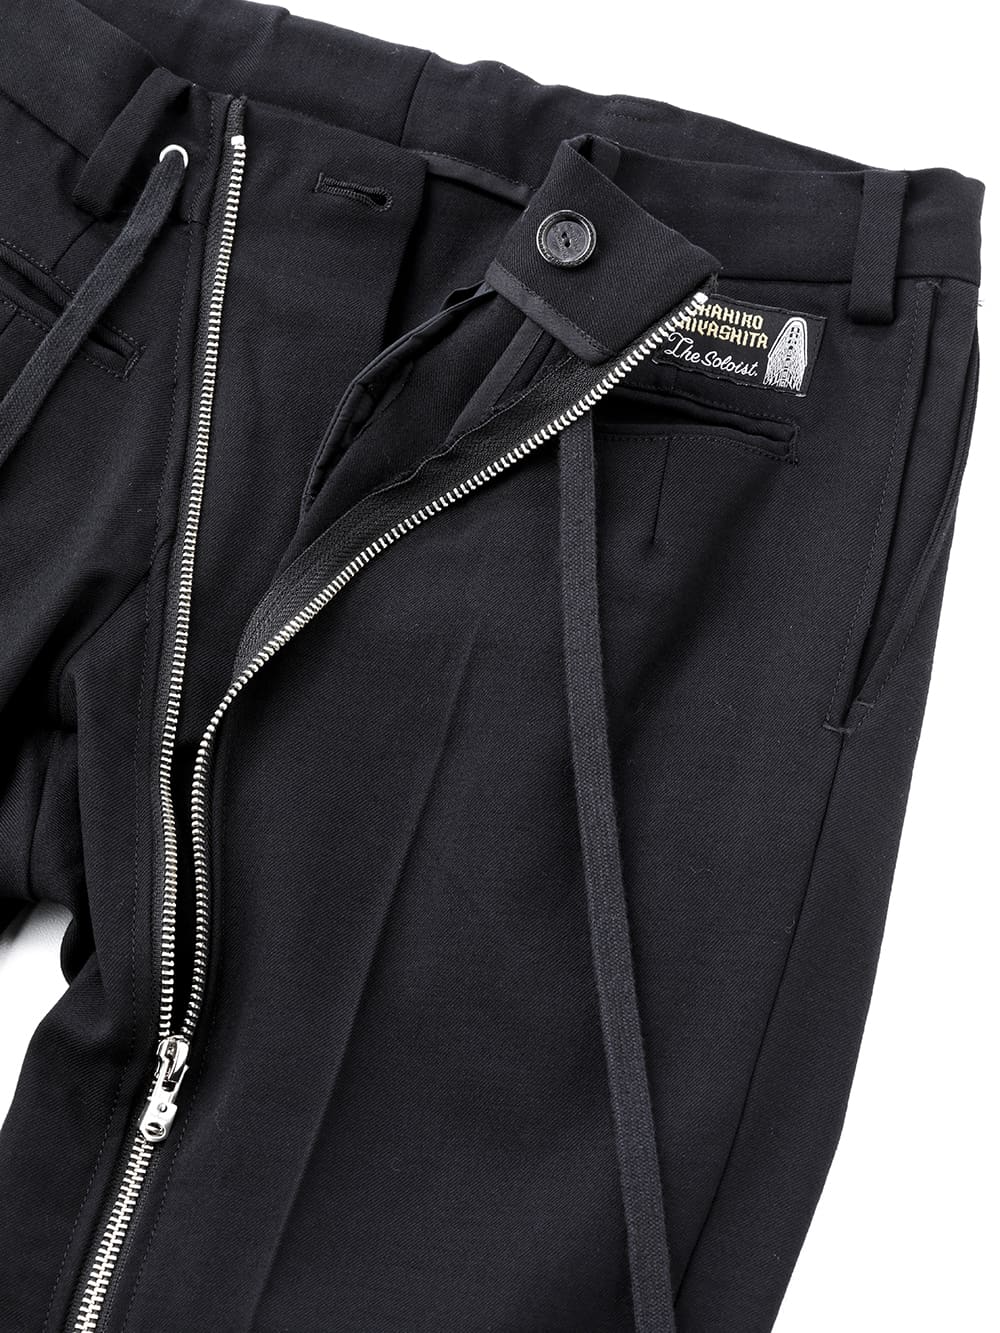 new reverse hip hugger zipper pant. 48-